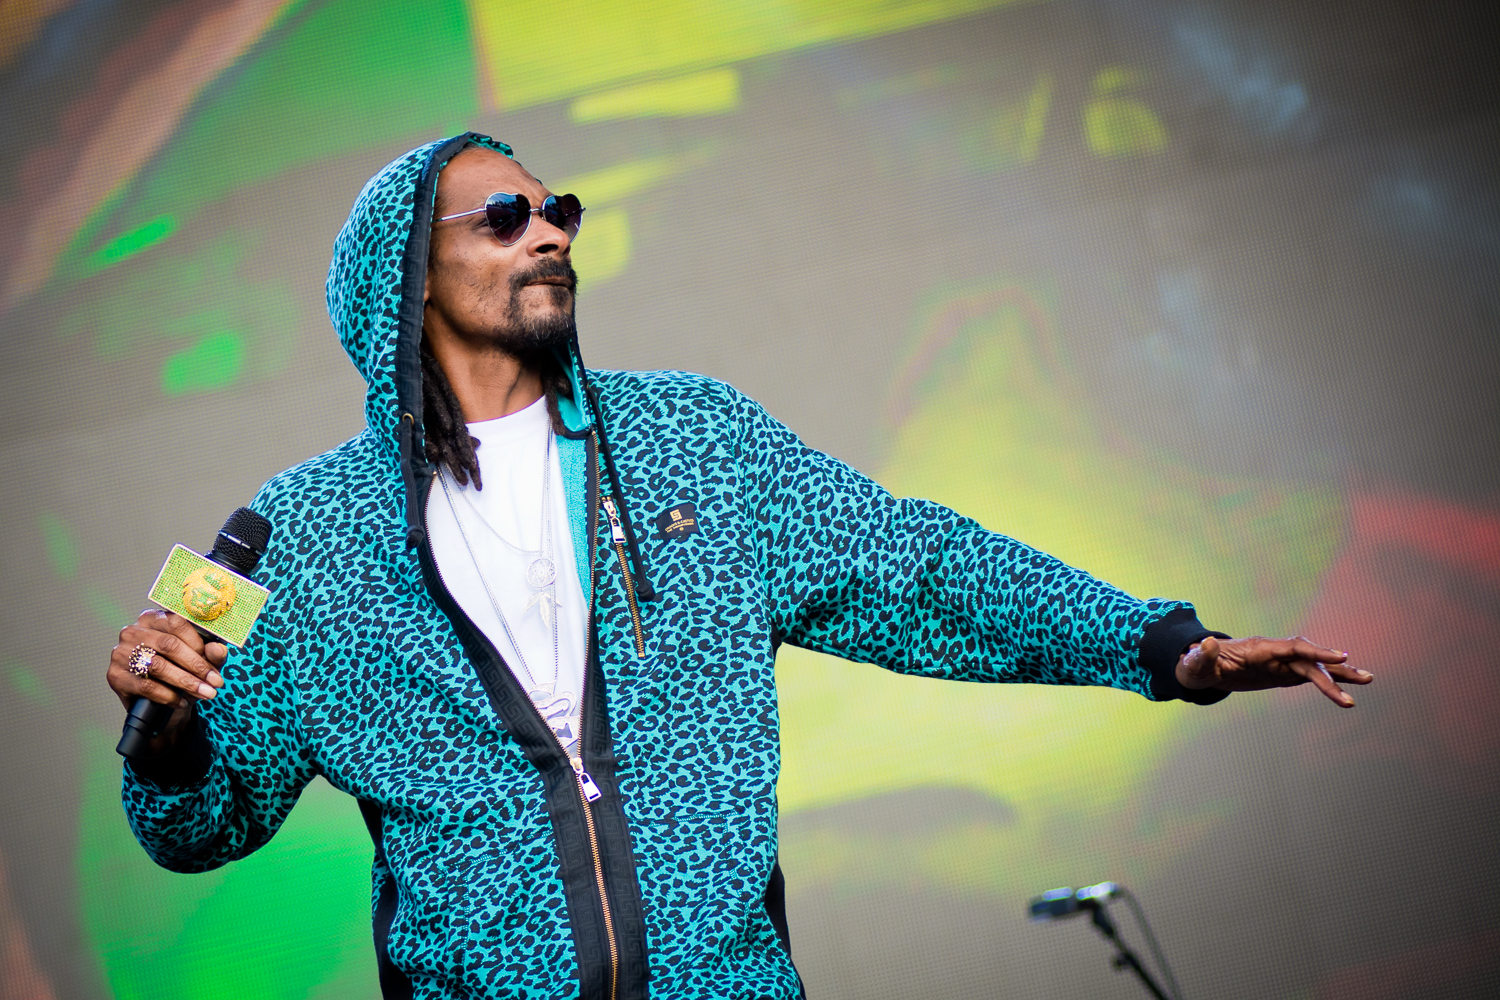 Snoop Dogg's Net Worth Speaks Of His Luxurious Life